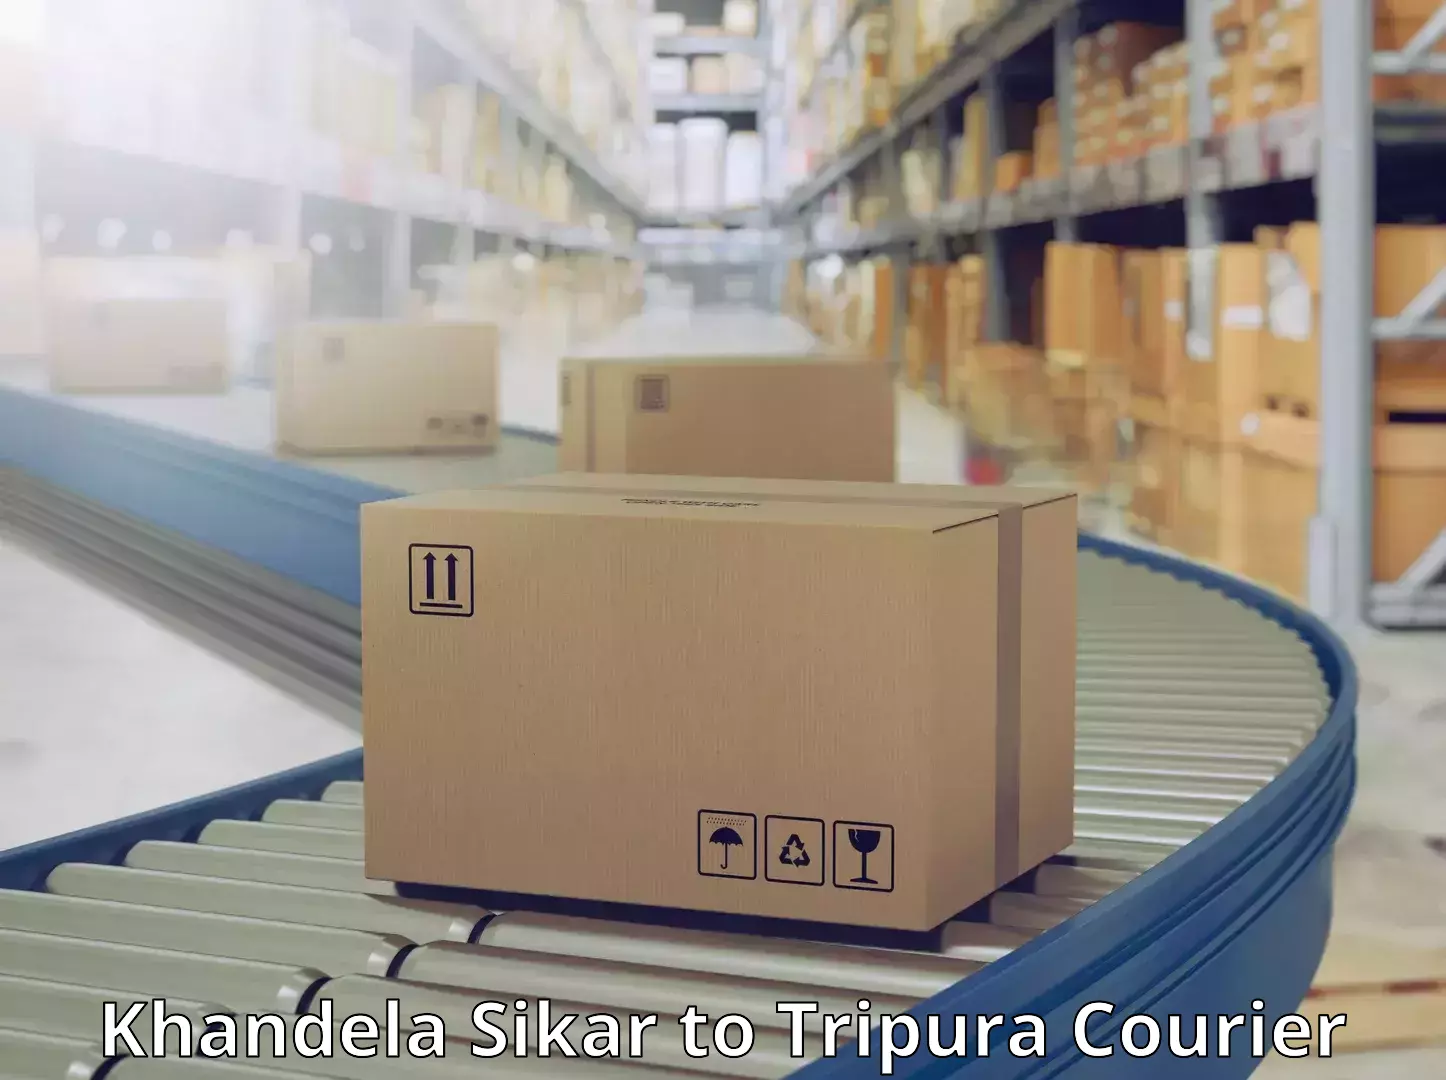 Urgent courier needs Khandela Sikar to Udaipur Tripura